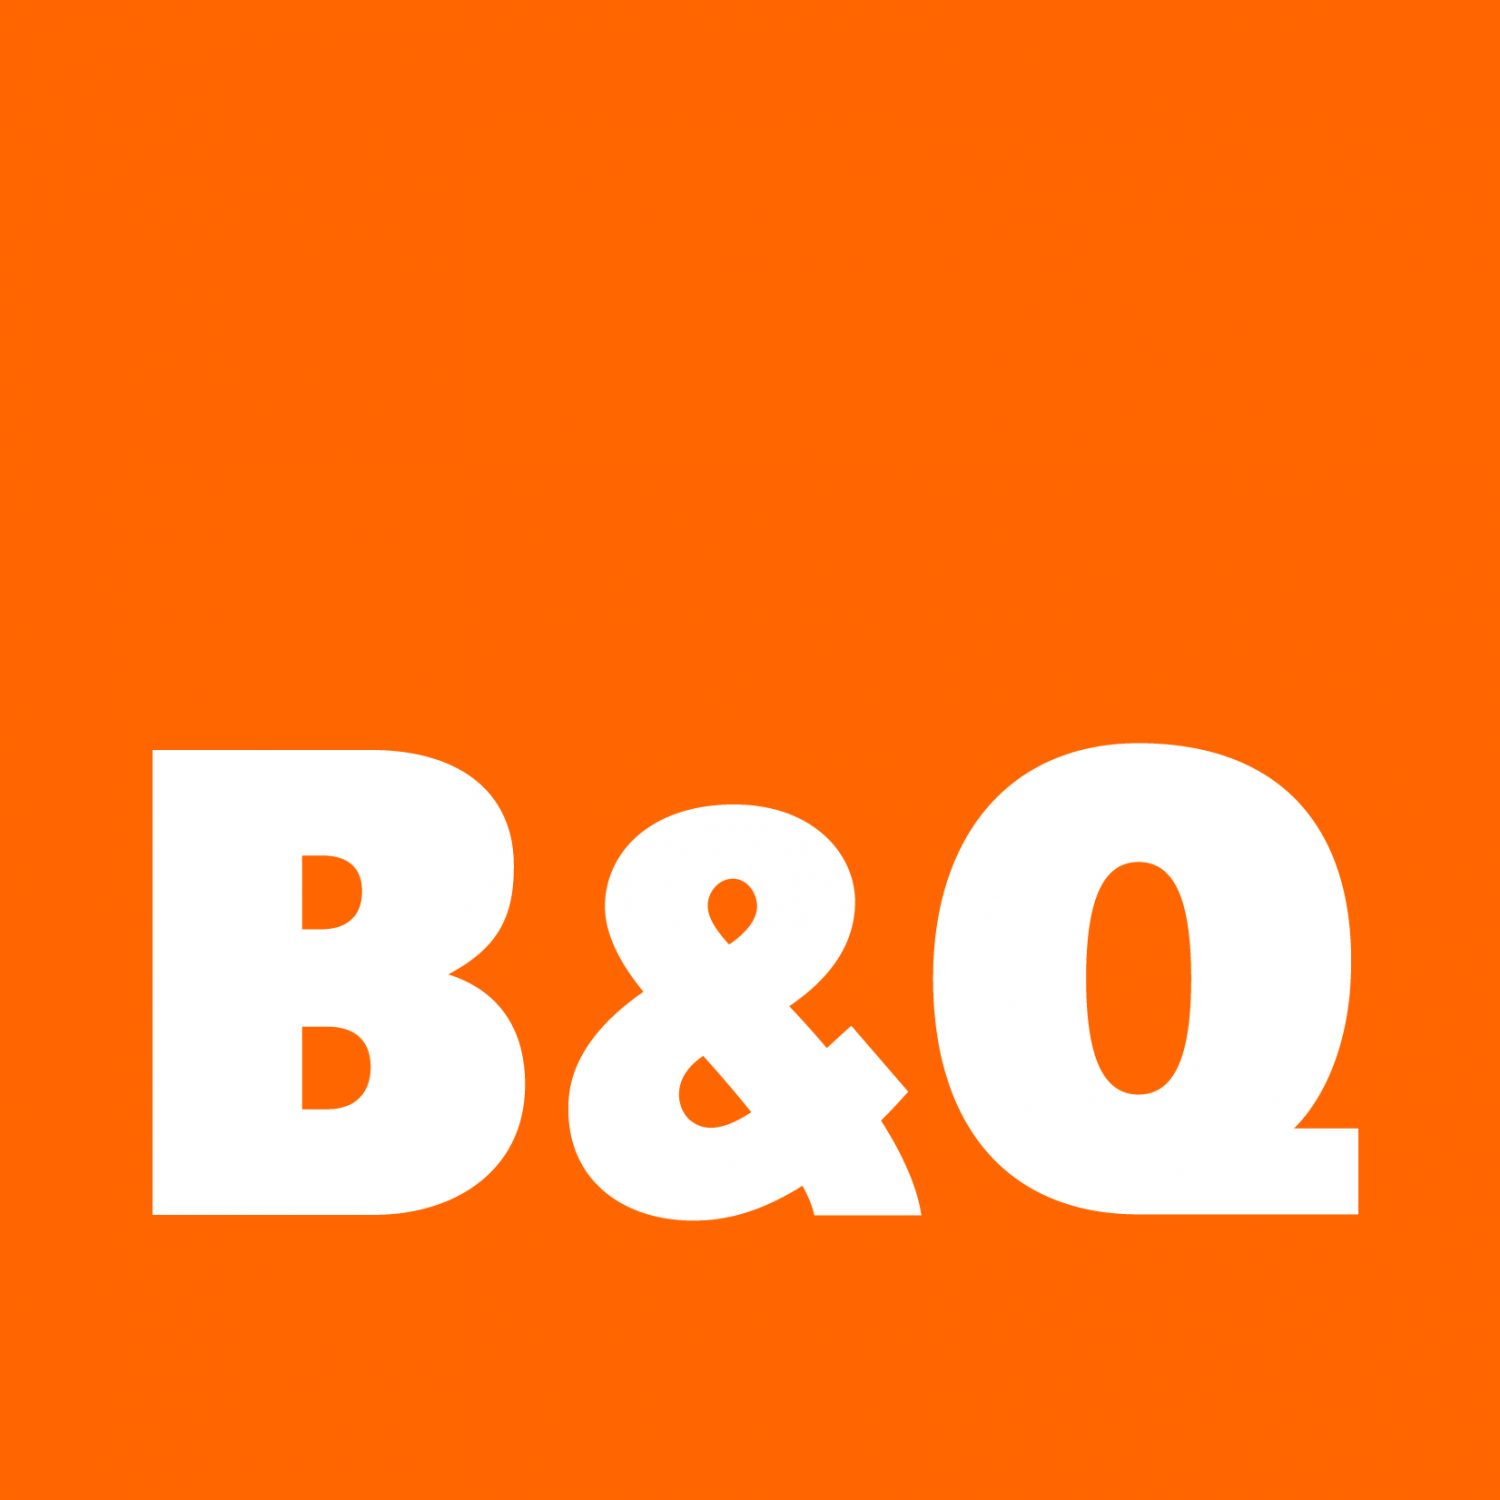 B&Q_original_Logo_CMYK - Procurement for Housing